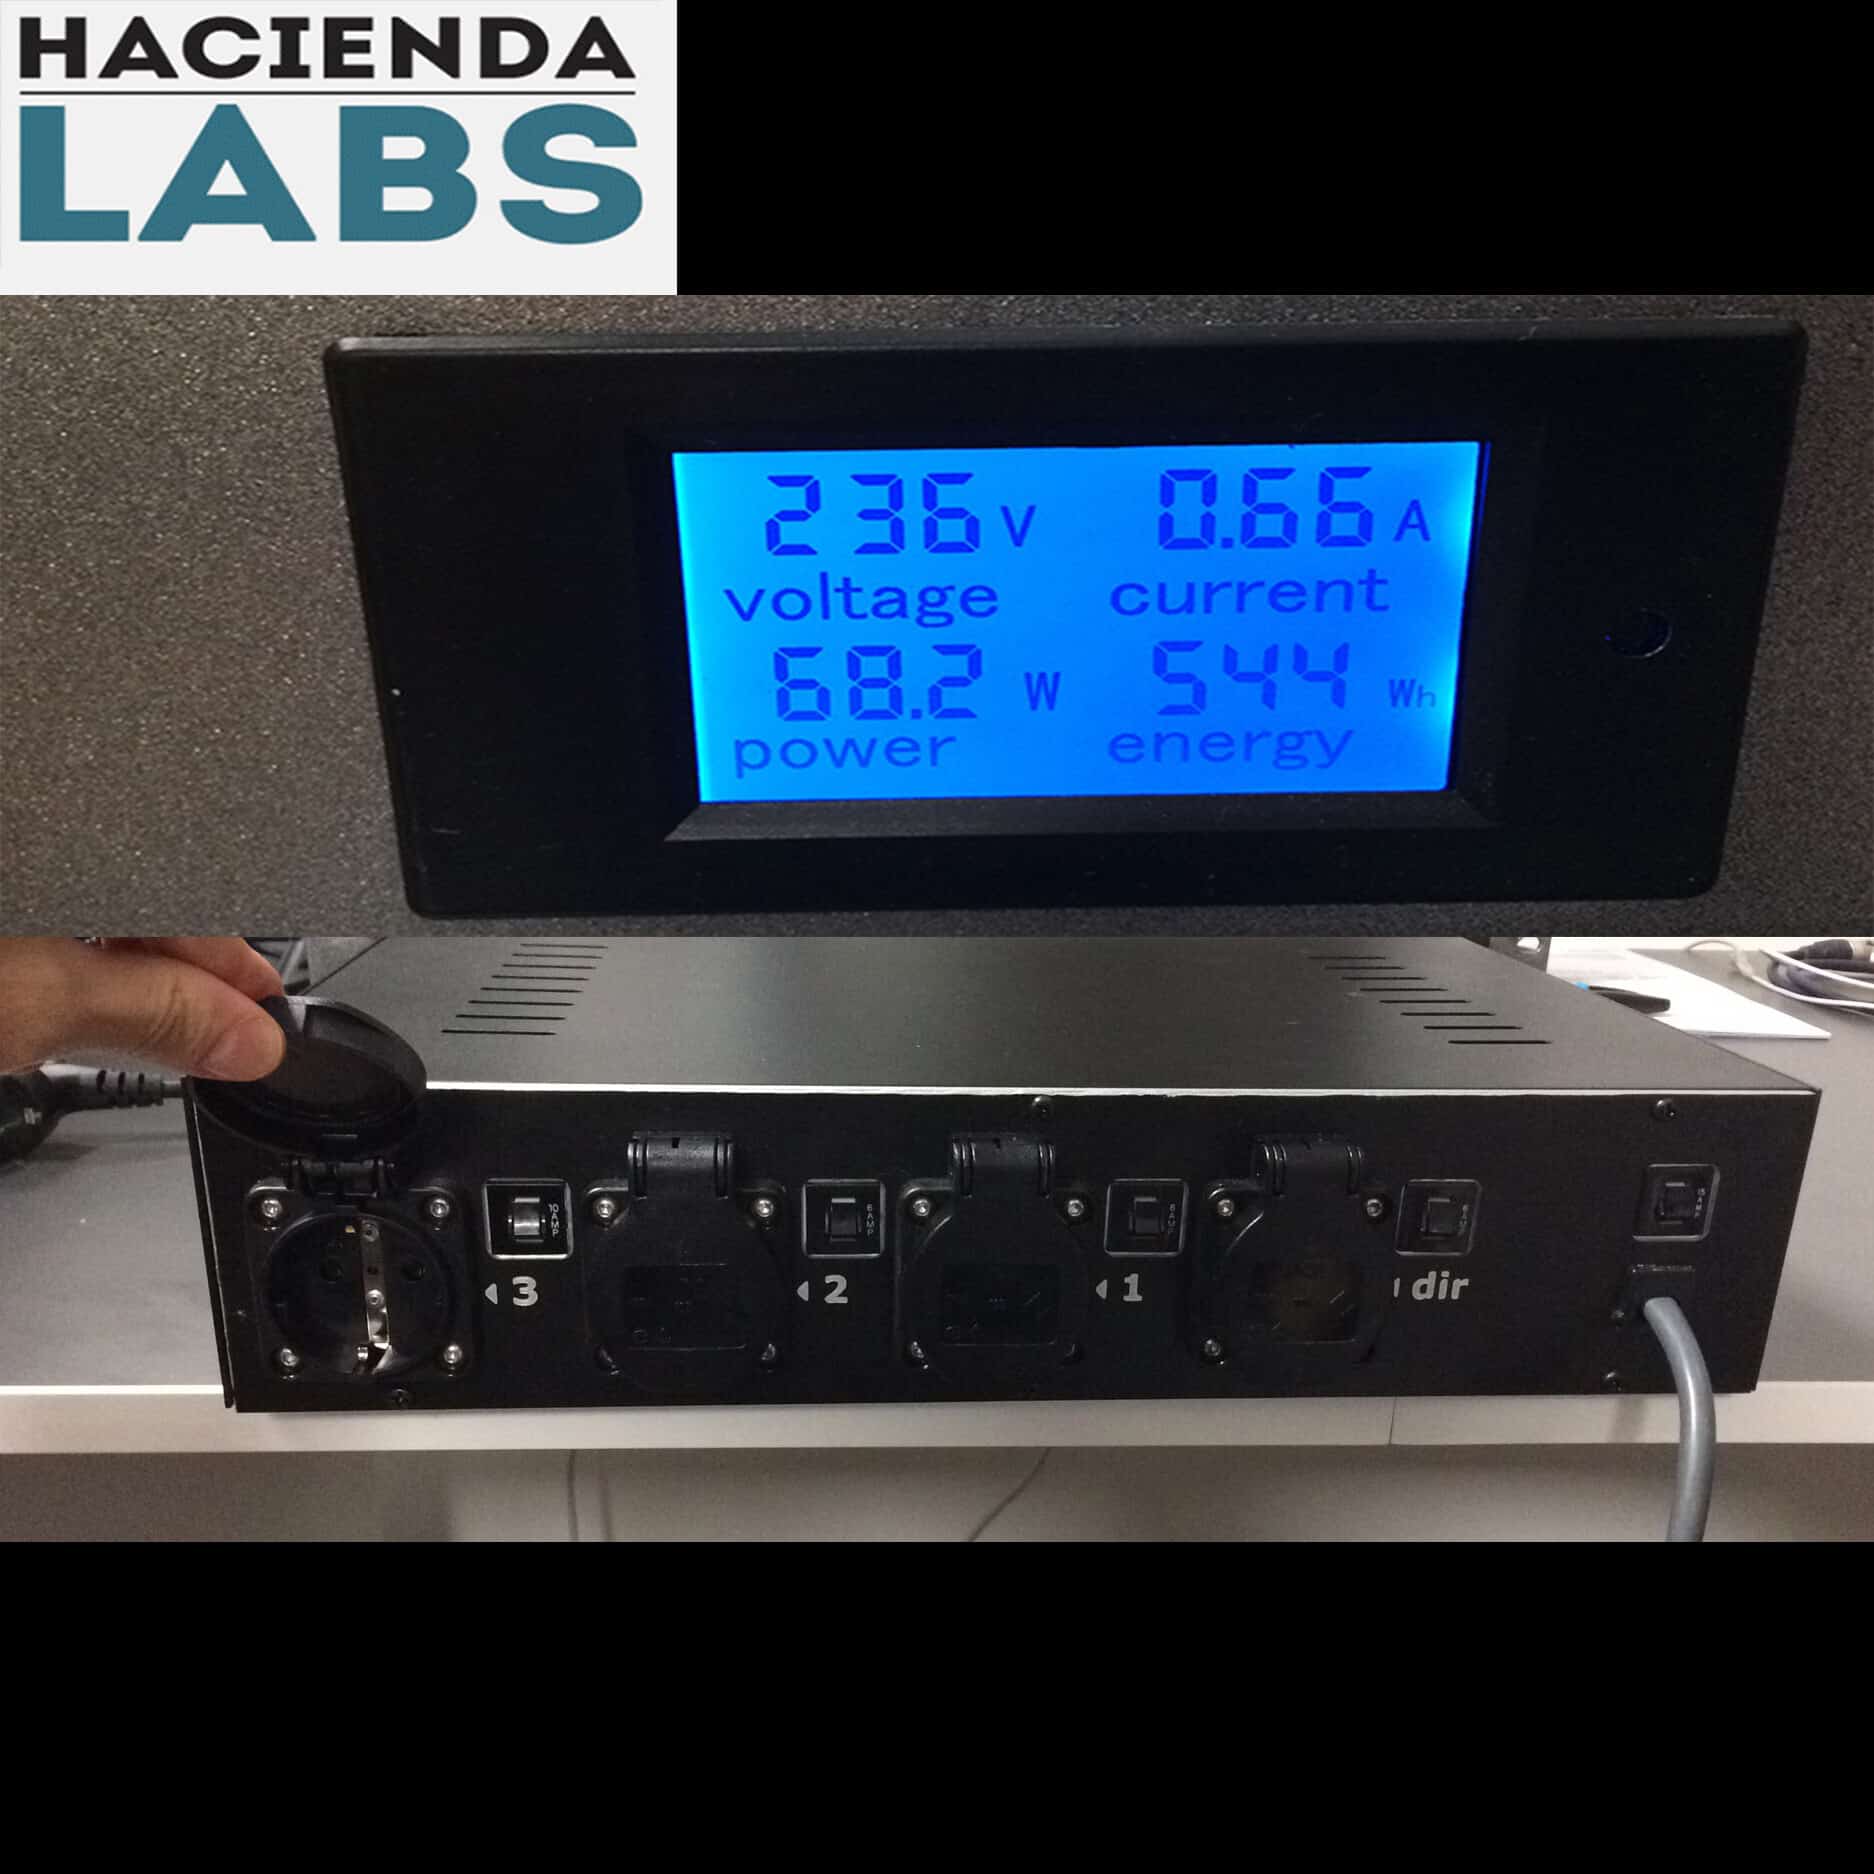 Hacienda_labs_power_management_back_LCD